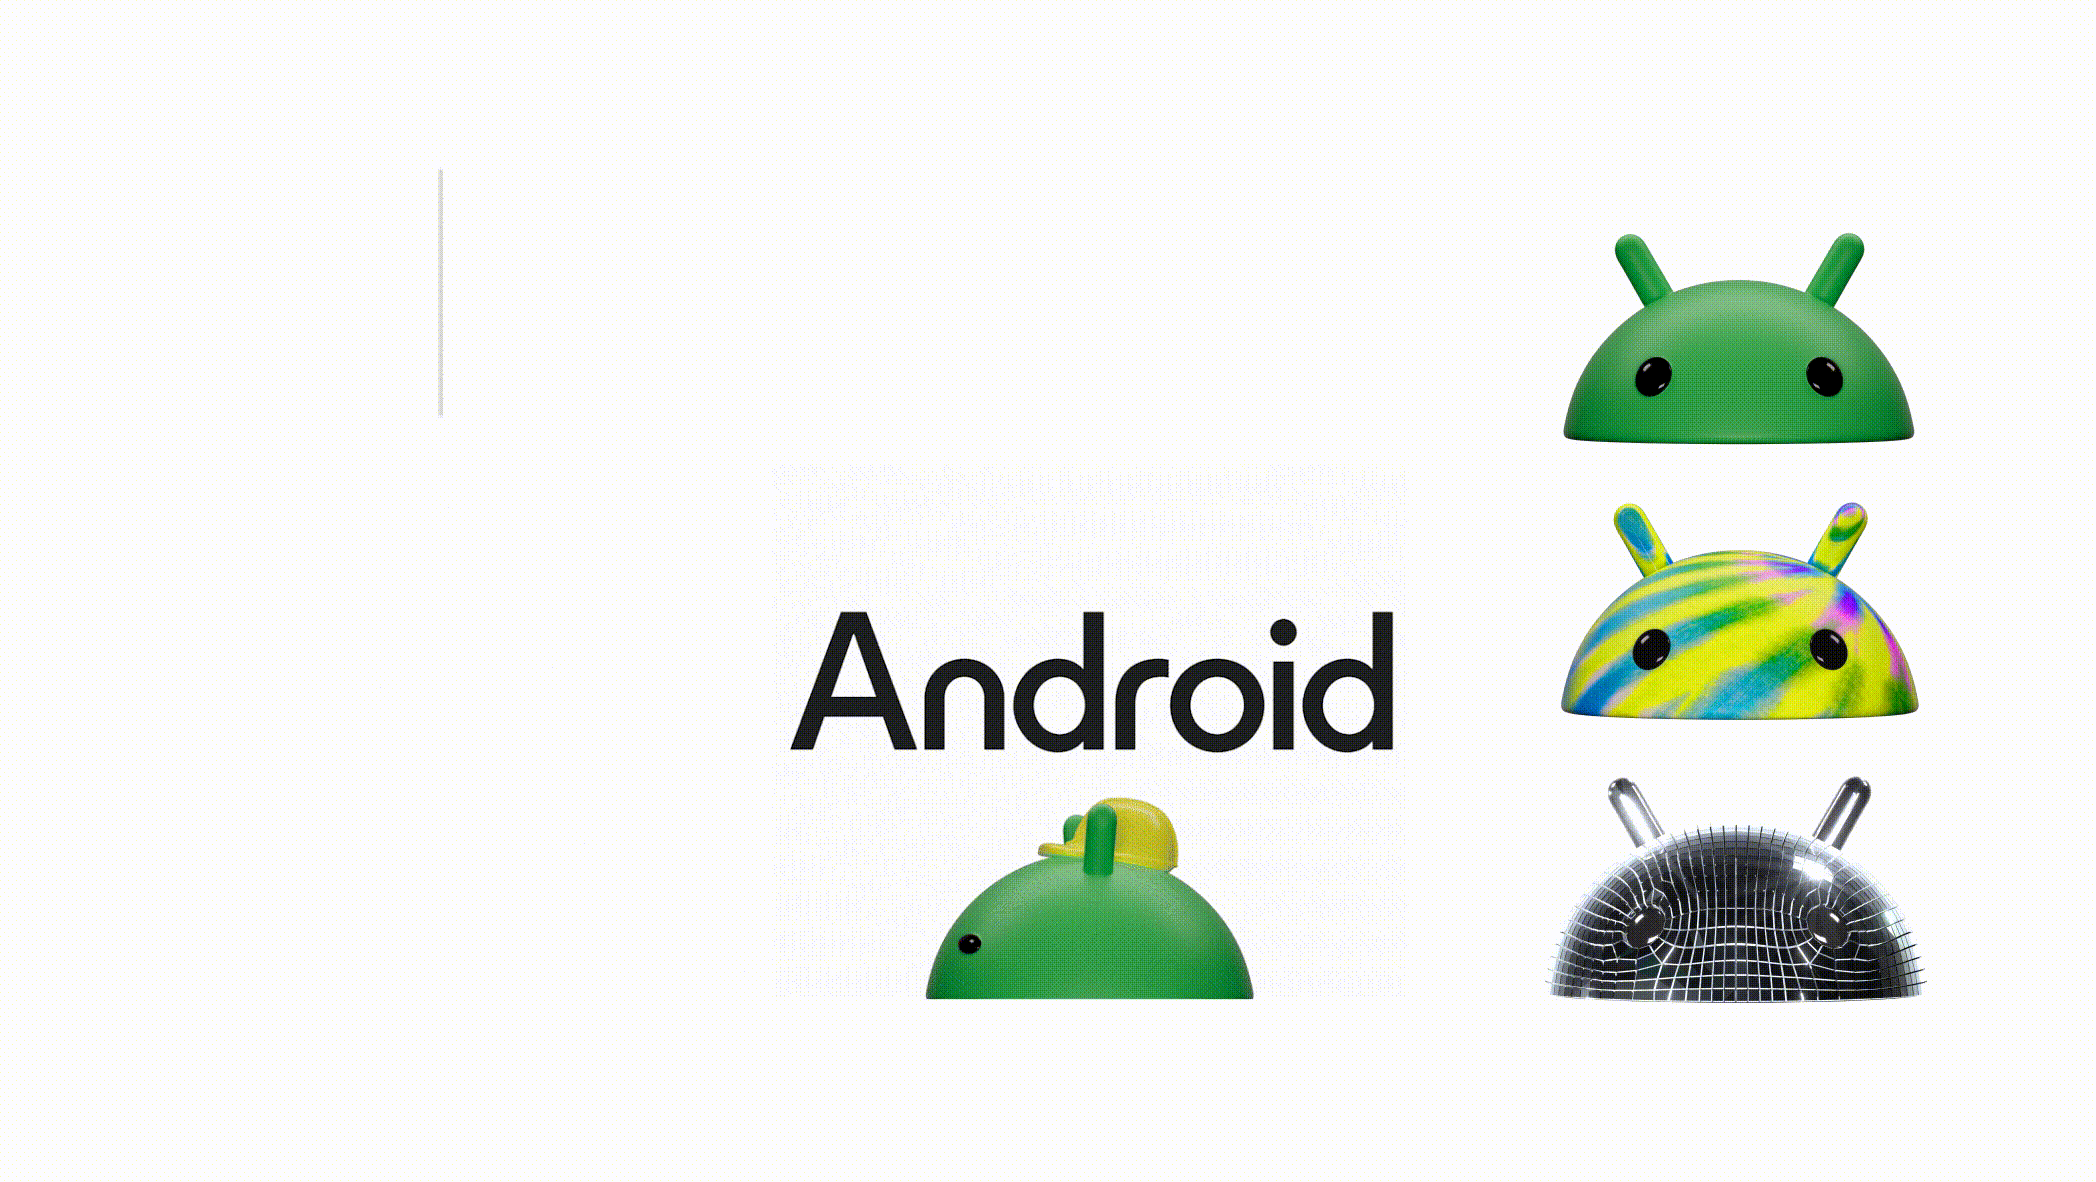 Android 小綠人與字型正式大變身！改成 3D 模樣有什麼理由嗎？